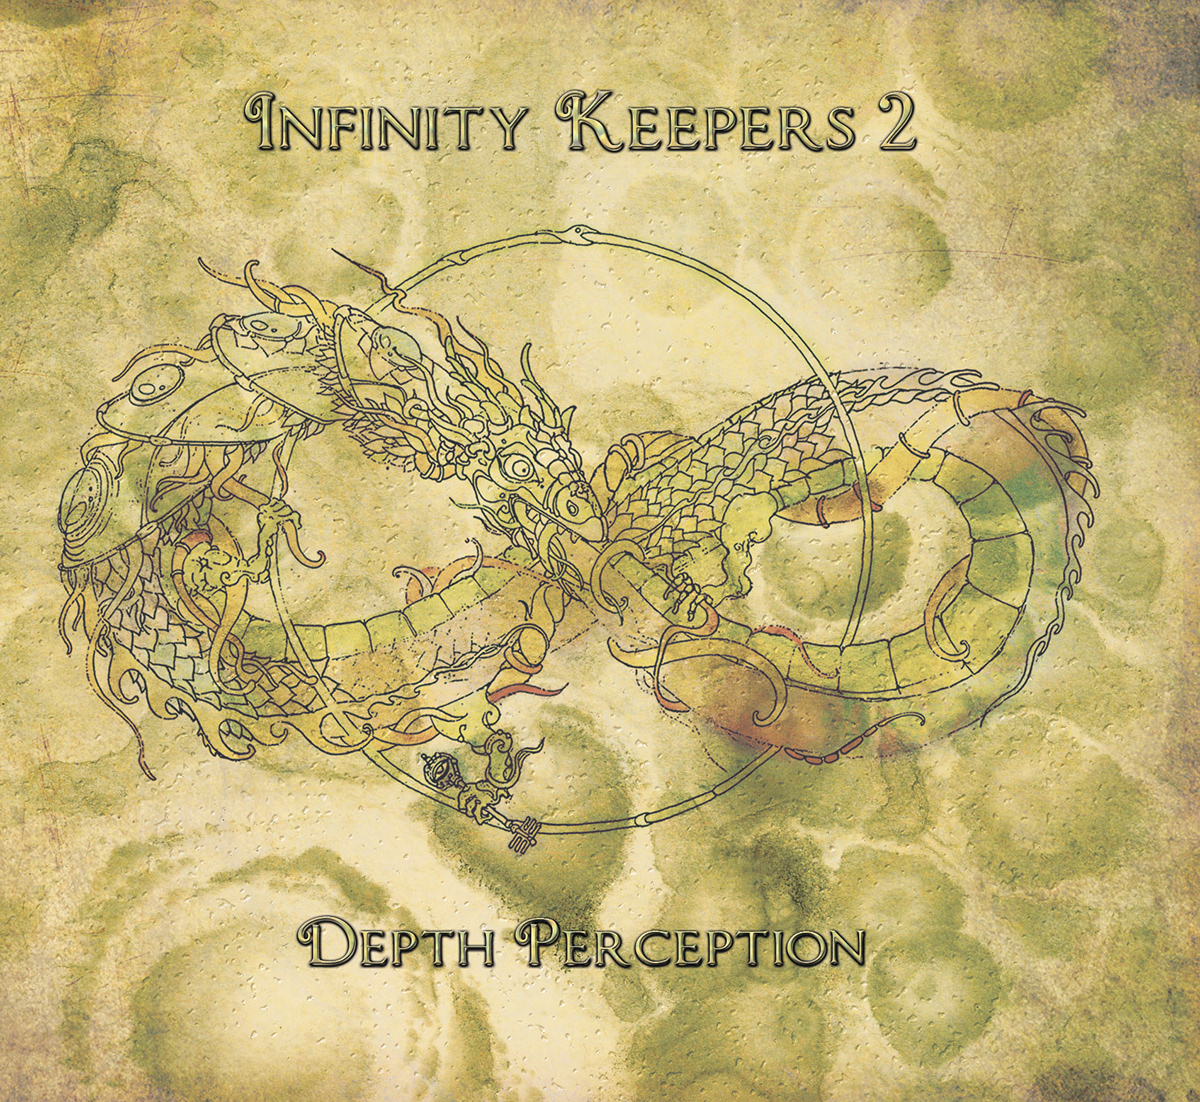 Infinity Keepers MoonKoradji records